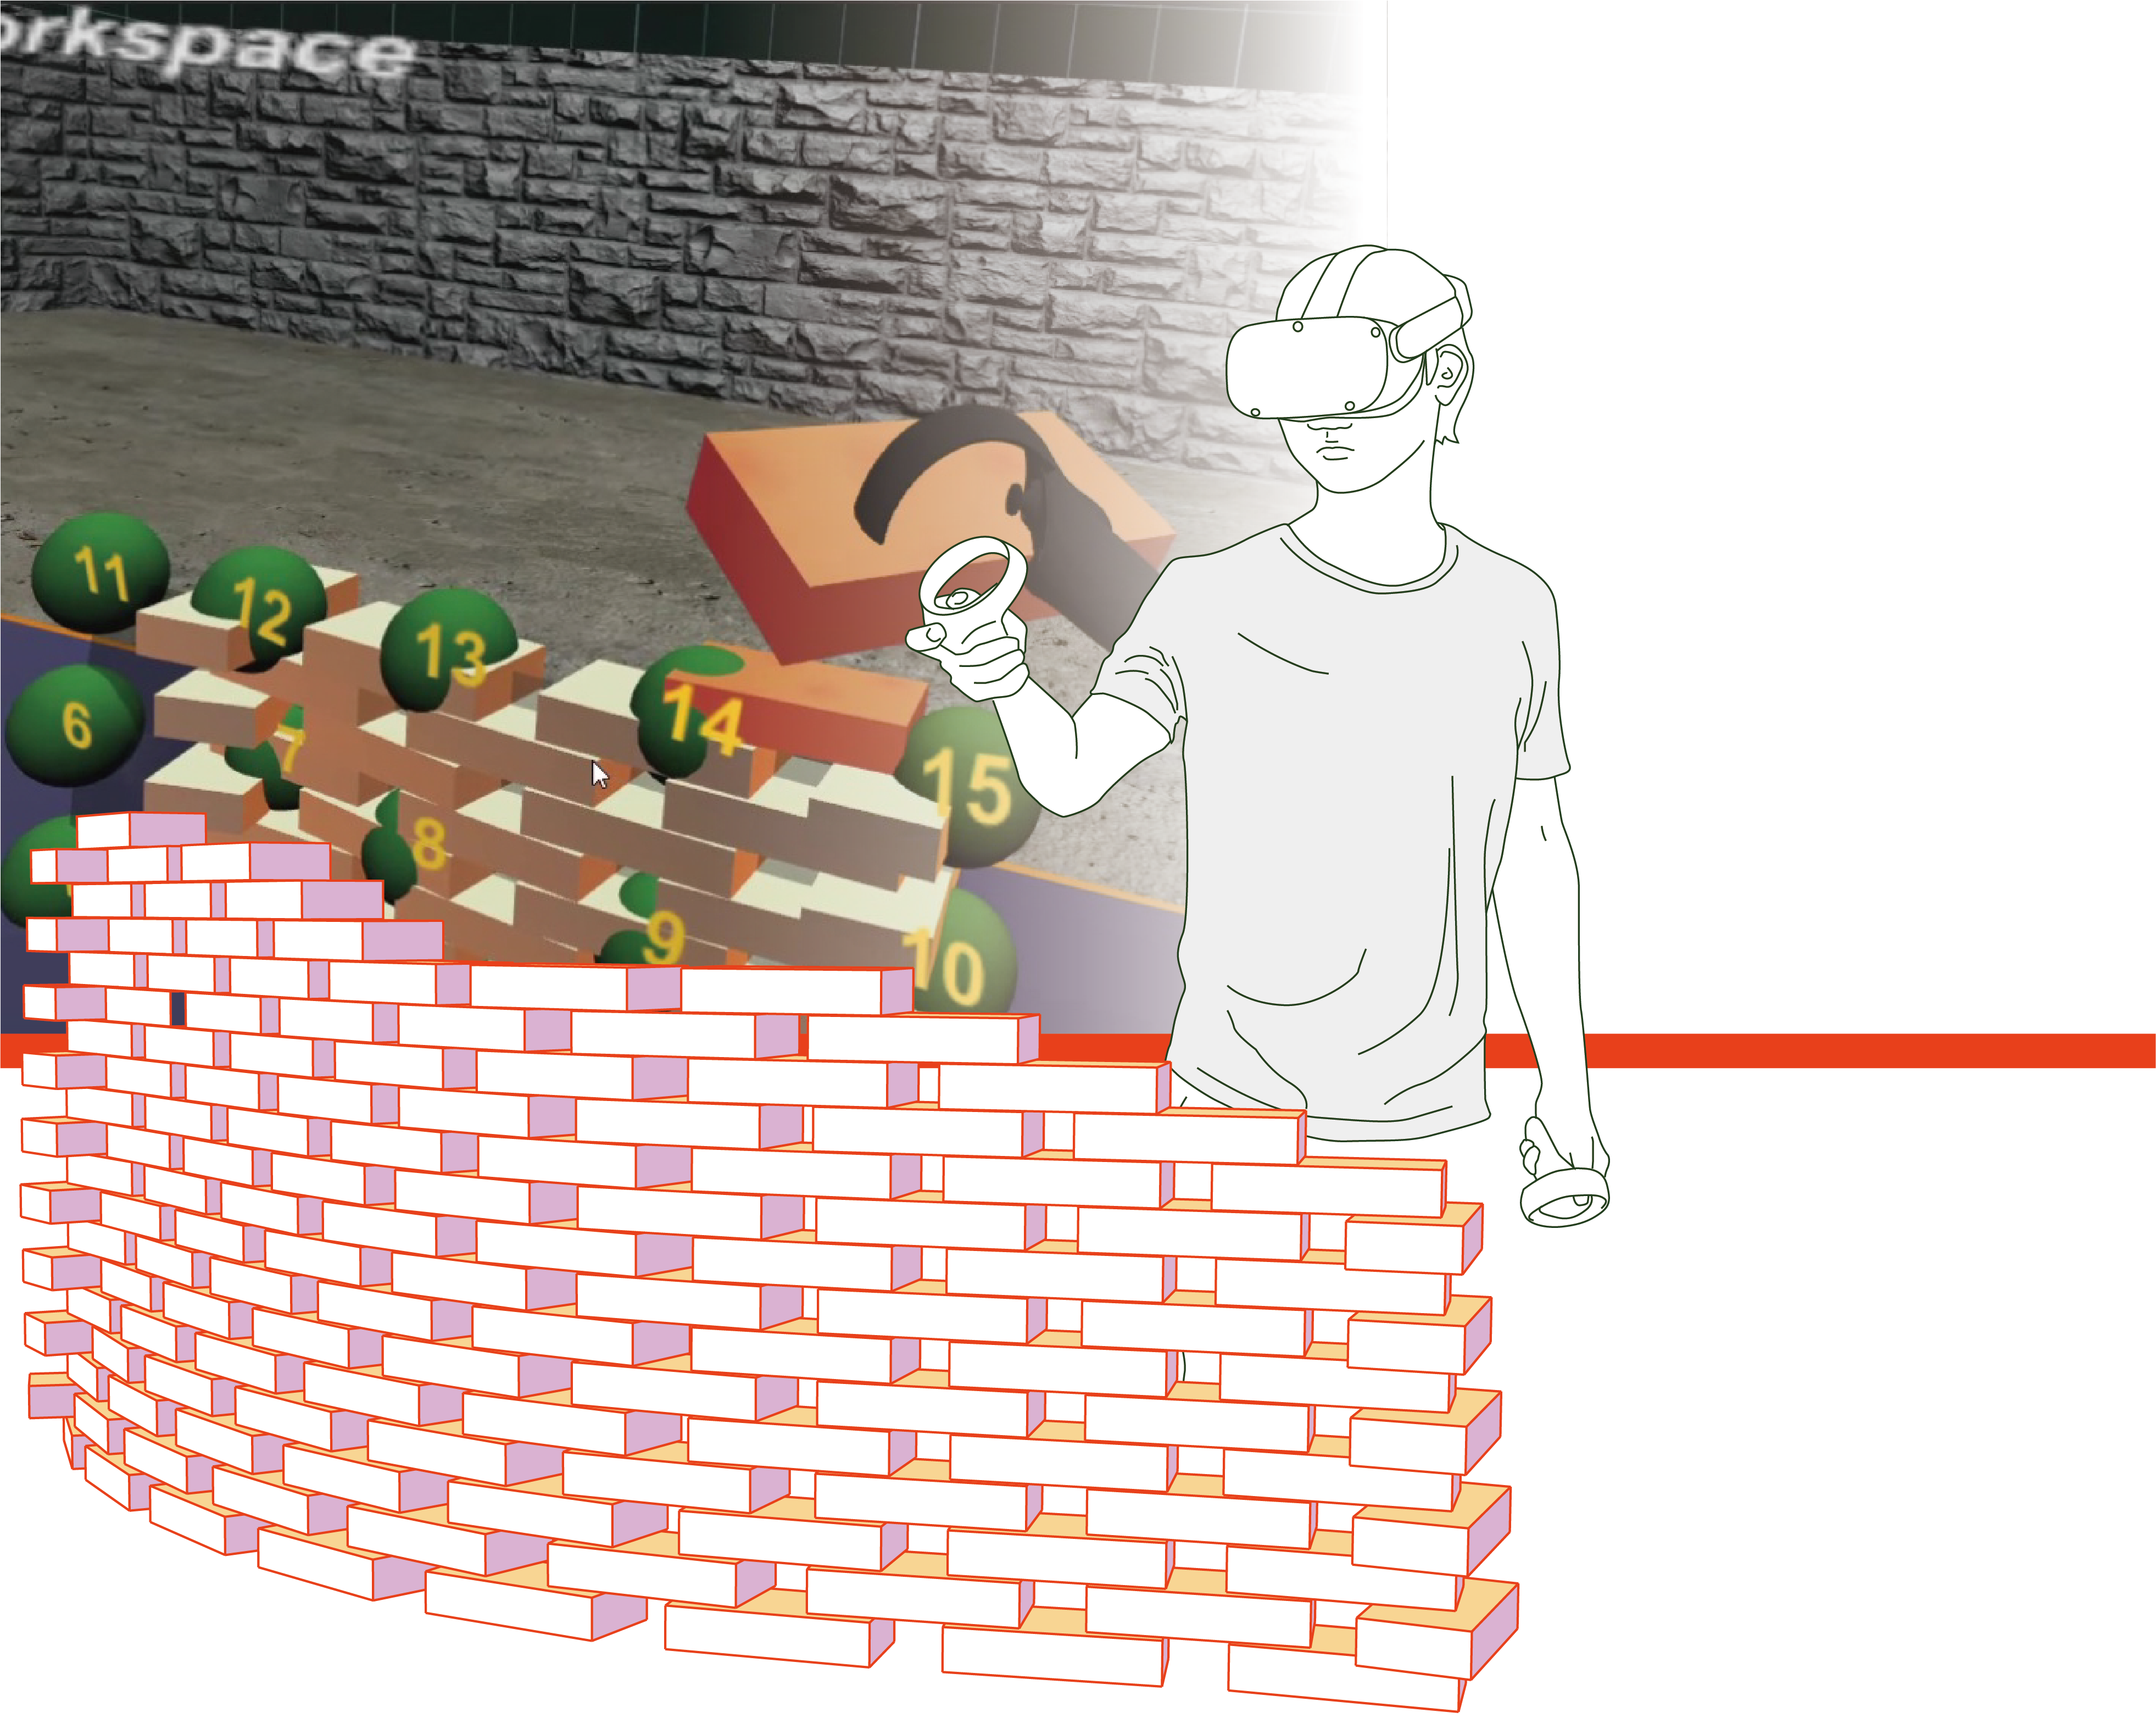 Intuitive Design Method for Robotic Brickwork Design and Fabrication